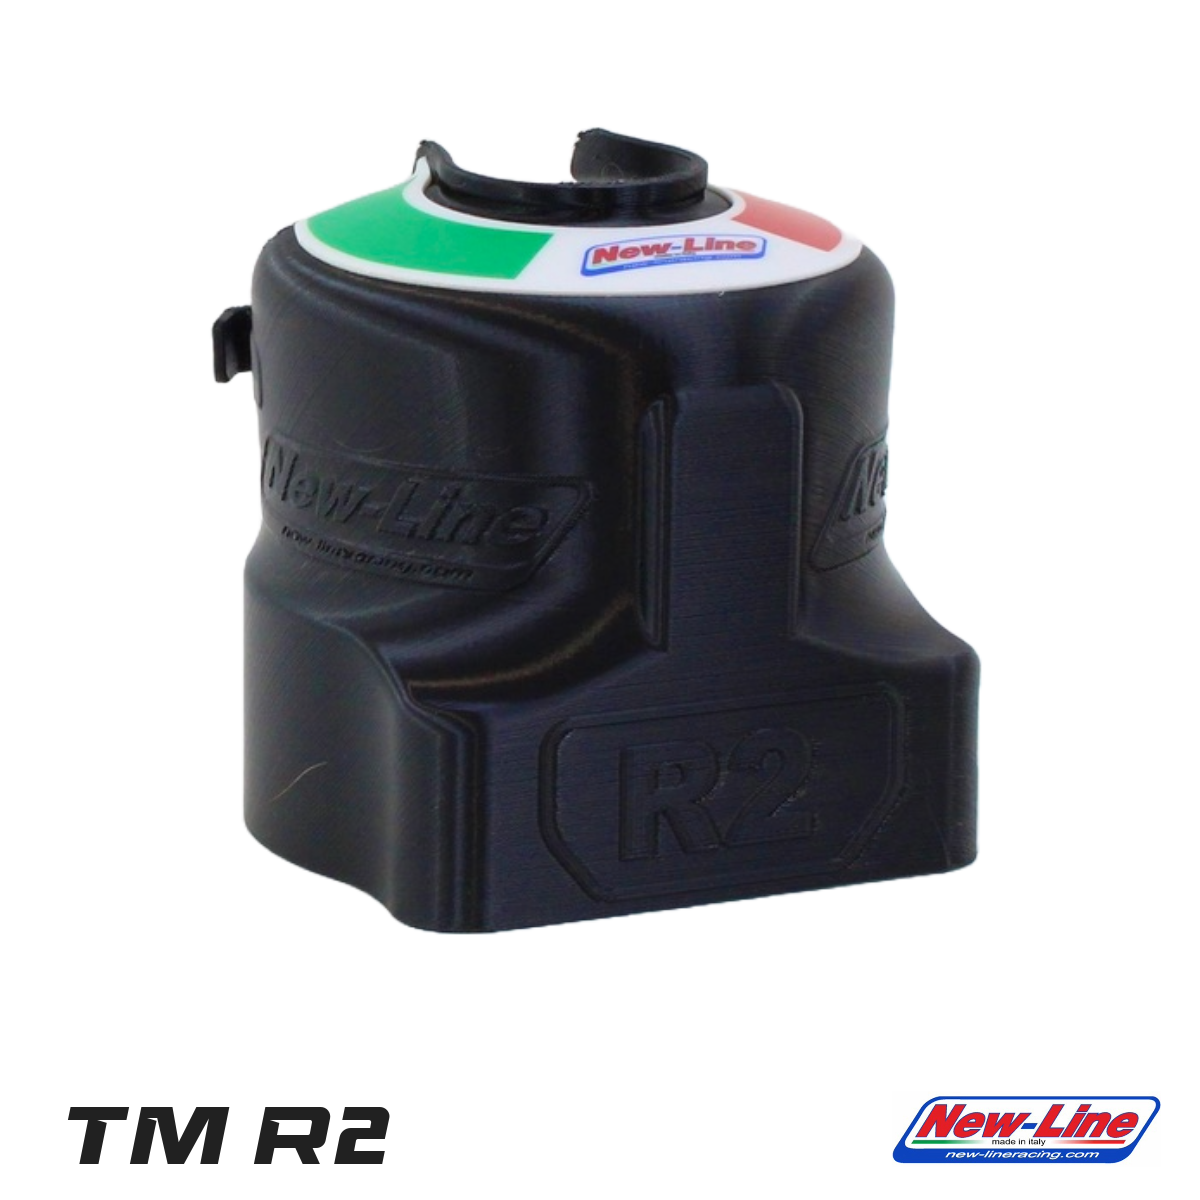 TM R2 Cylinder cover